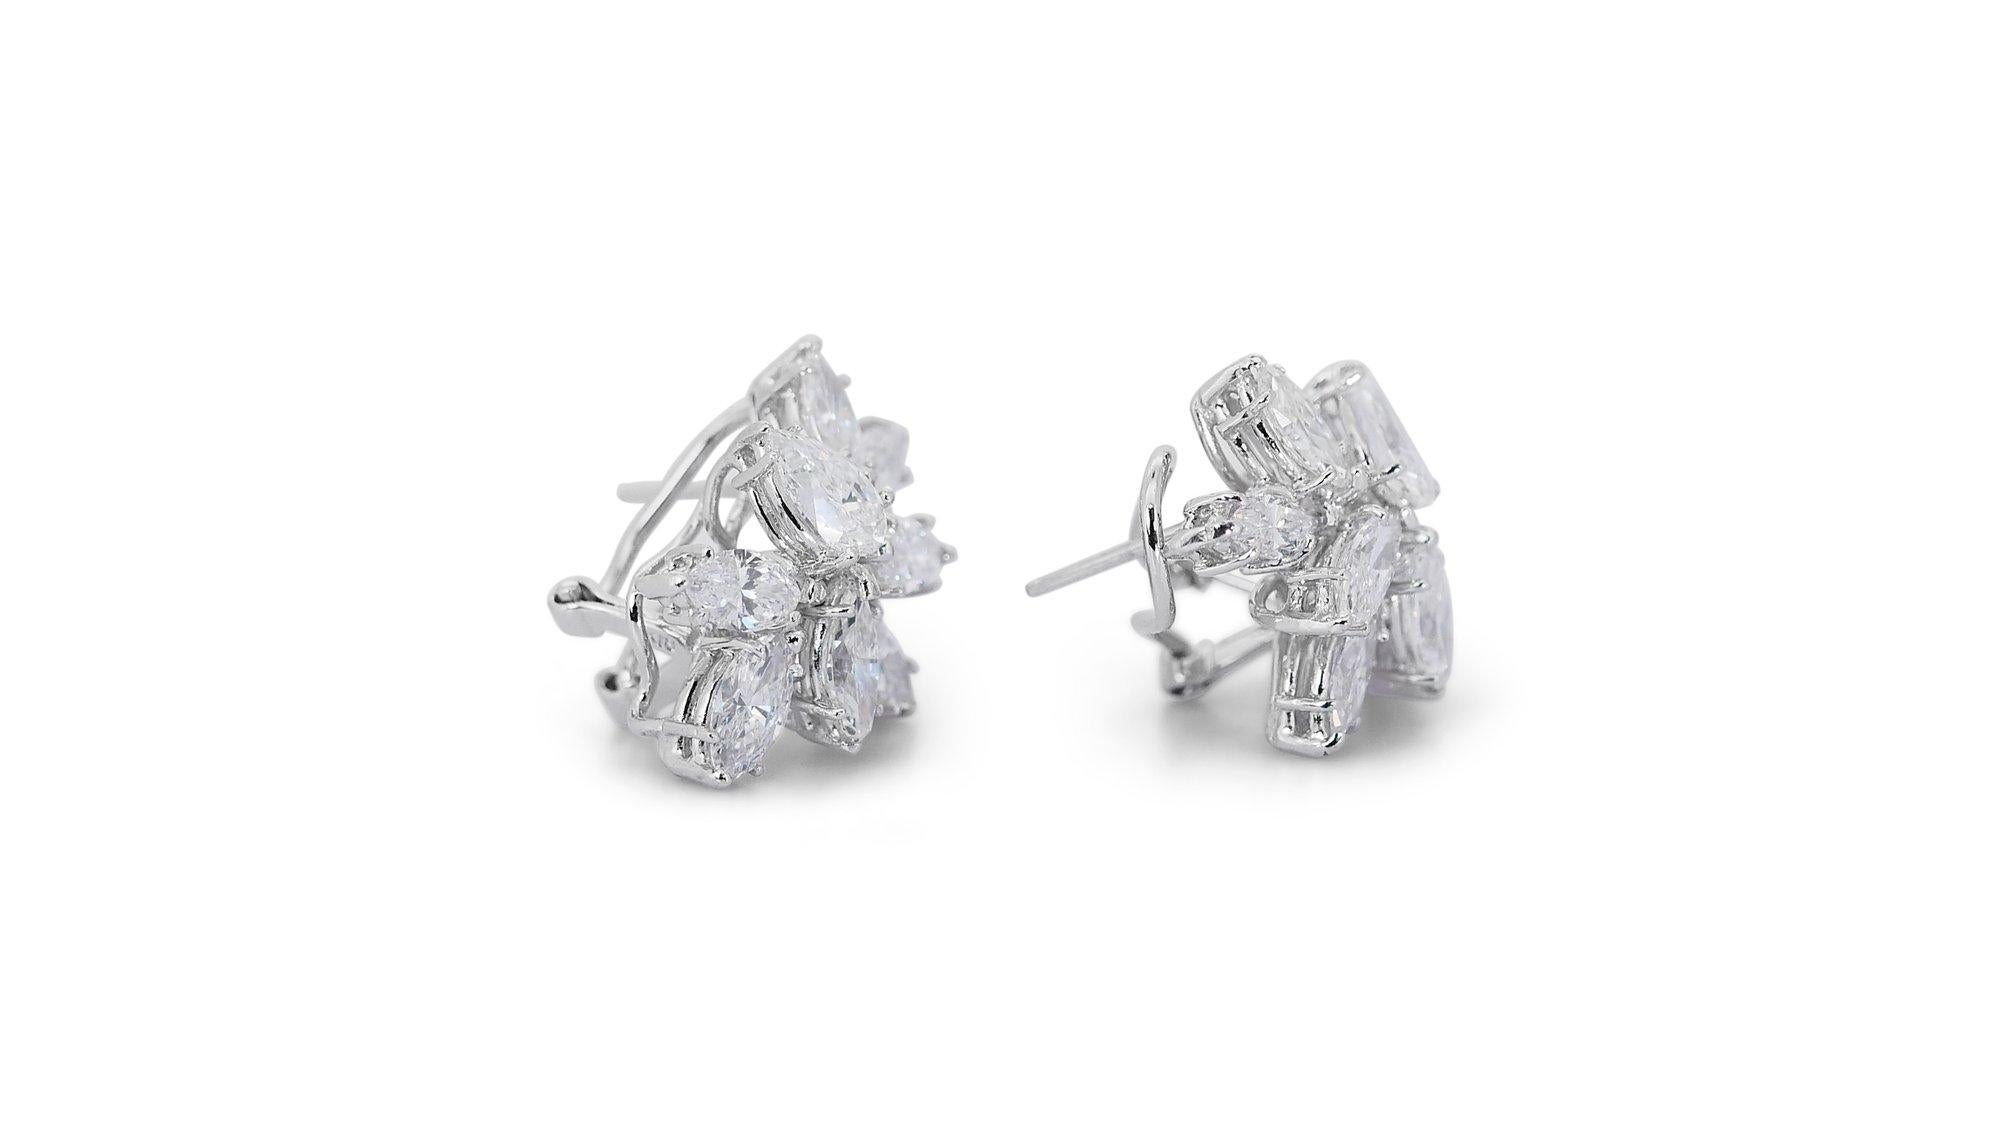 18 kt. White Gold Diamond Earrings with 6 ct Total Natural Diamonds - IGI Cert 3